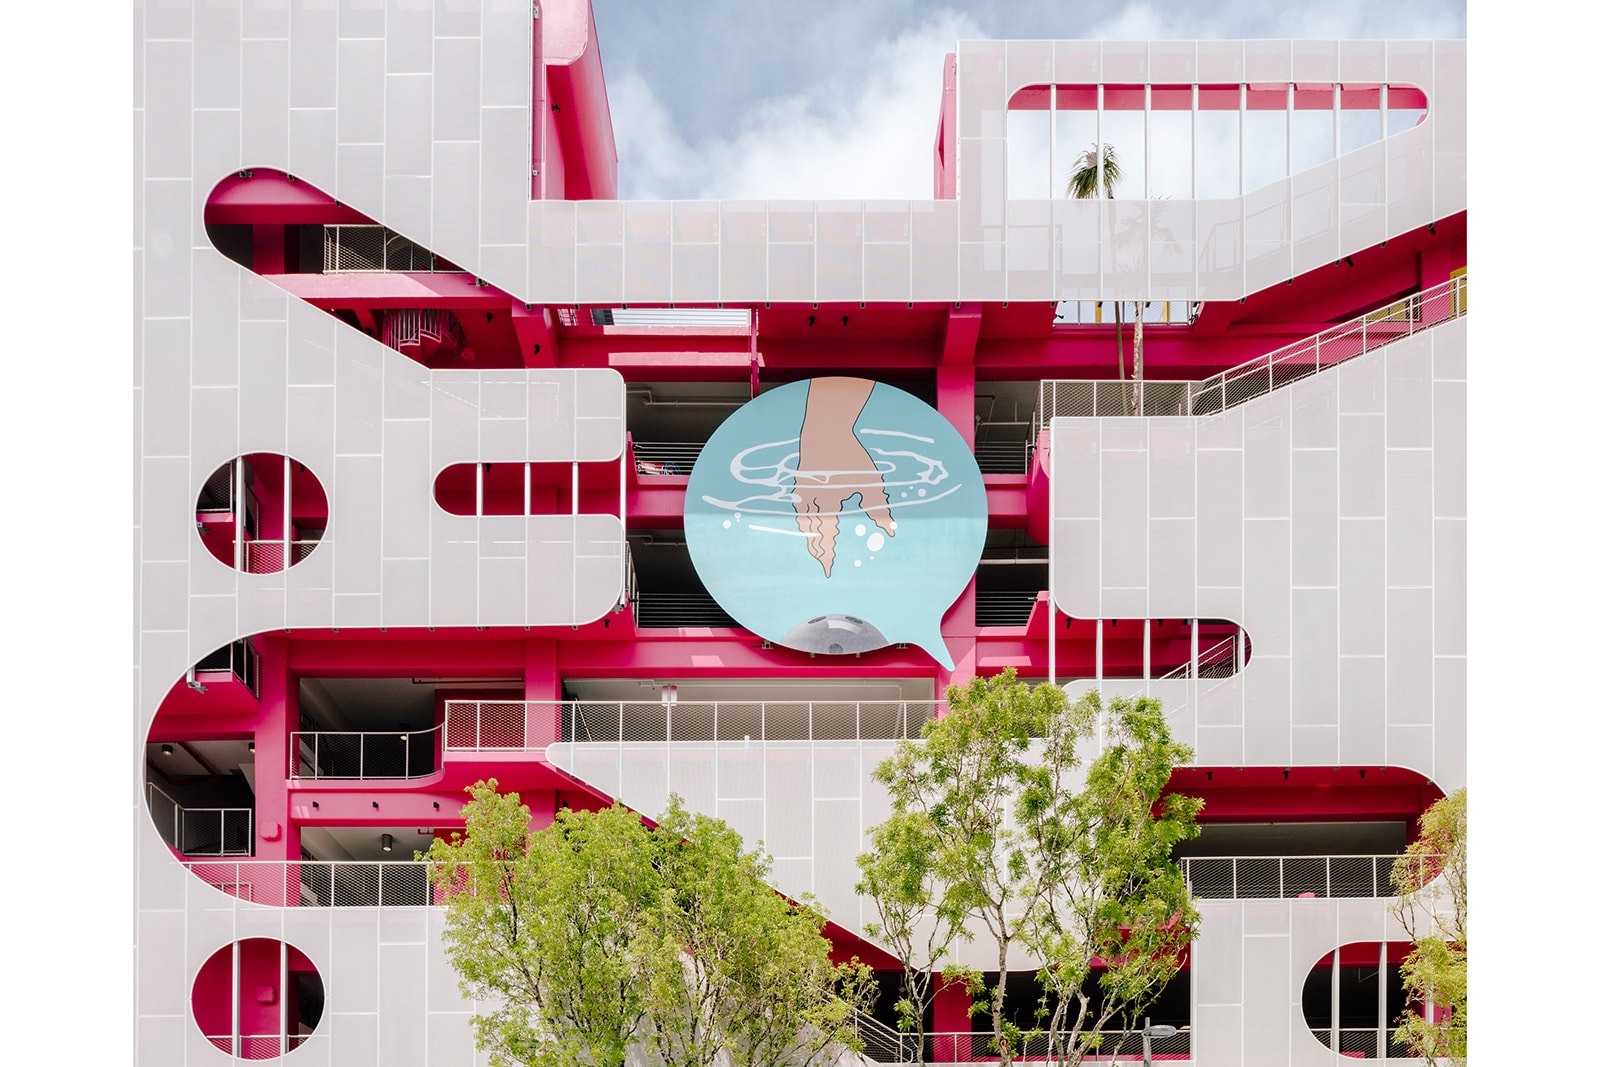 Museum Garage Miami Design District parking garage architecture J Mayer H WORKac Clavel Arquitectos Keenen/Riley Nicolas Buffe